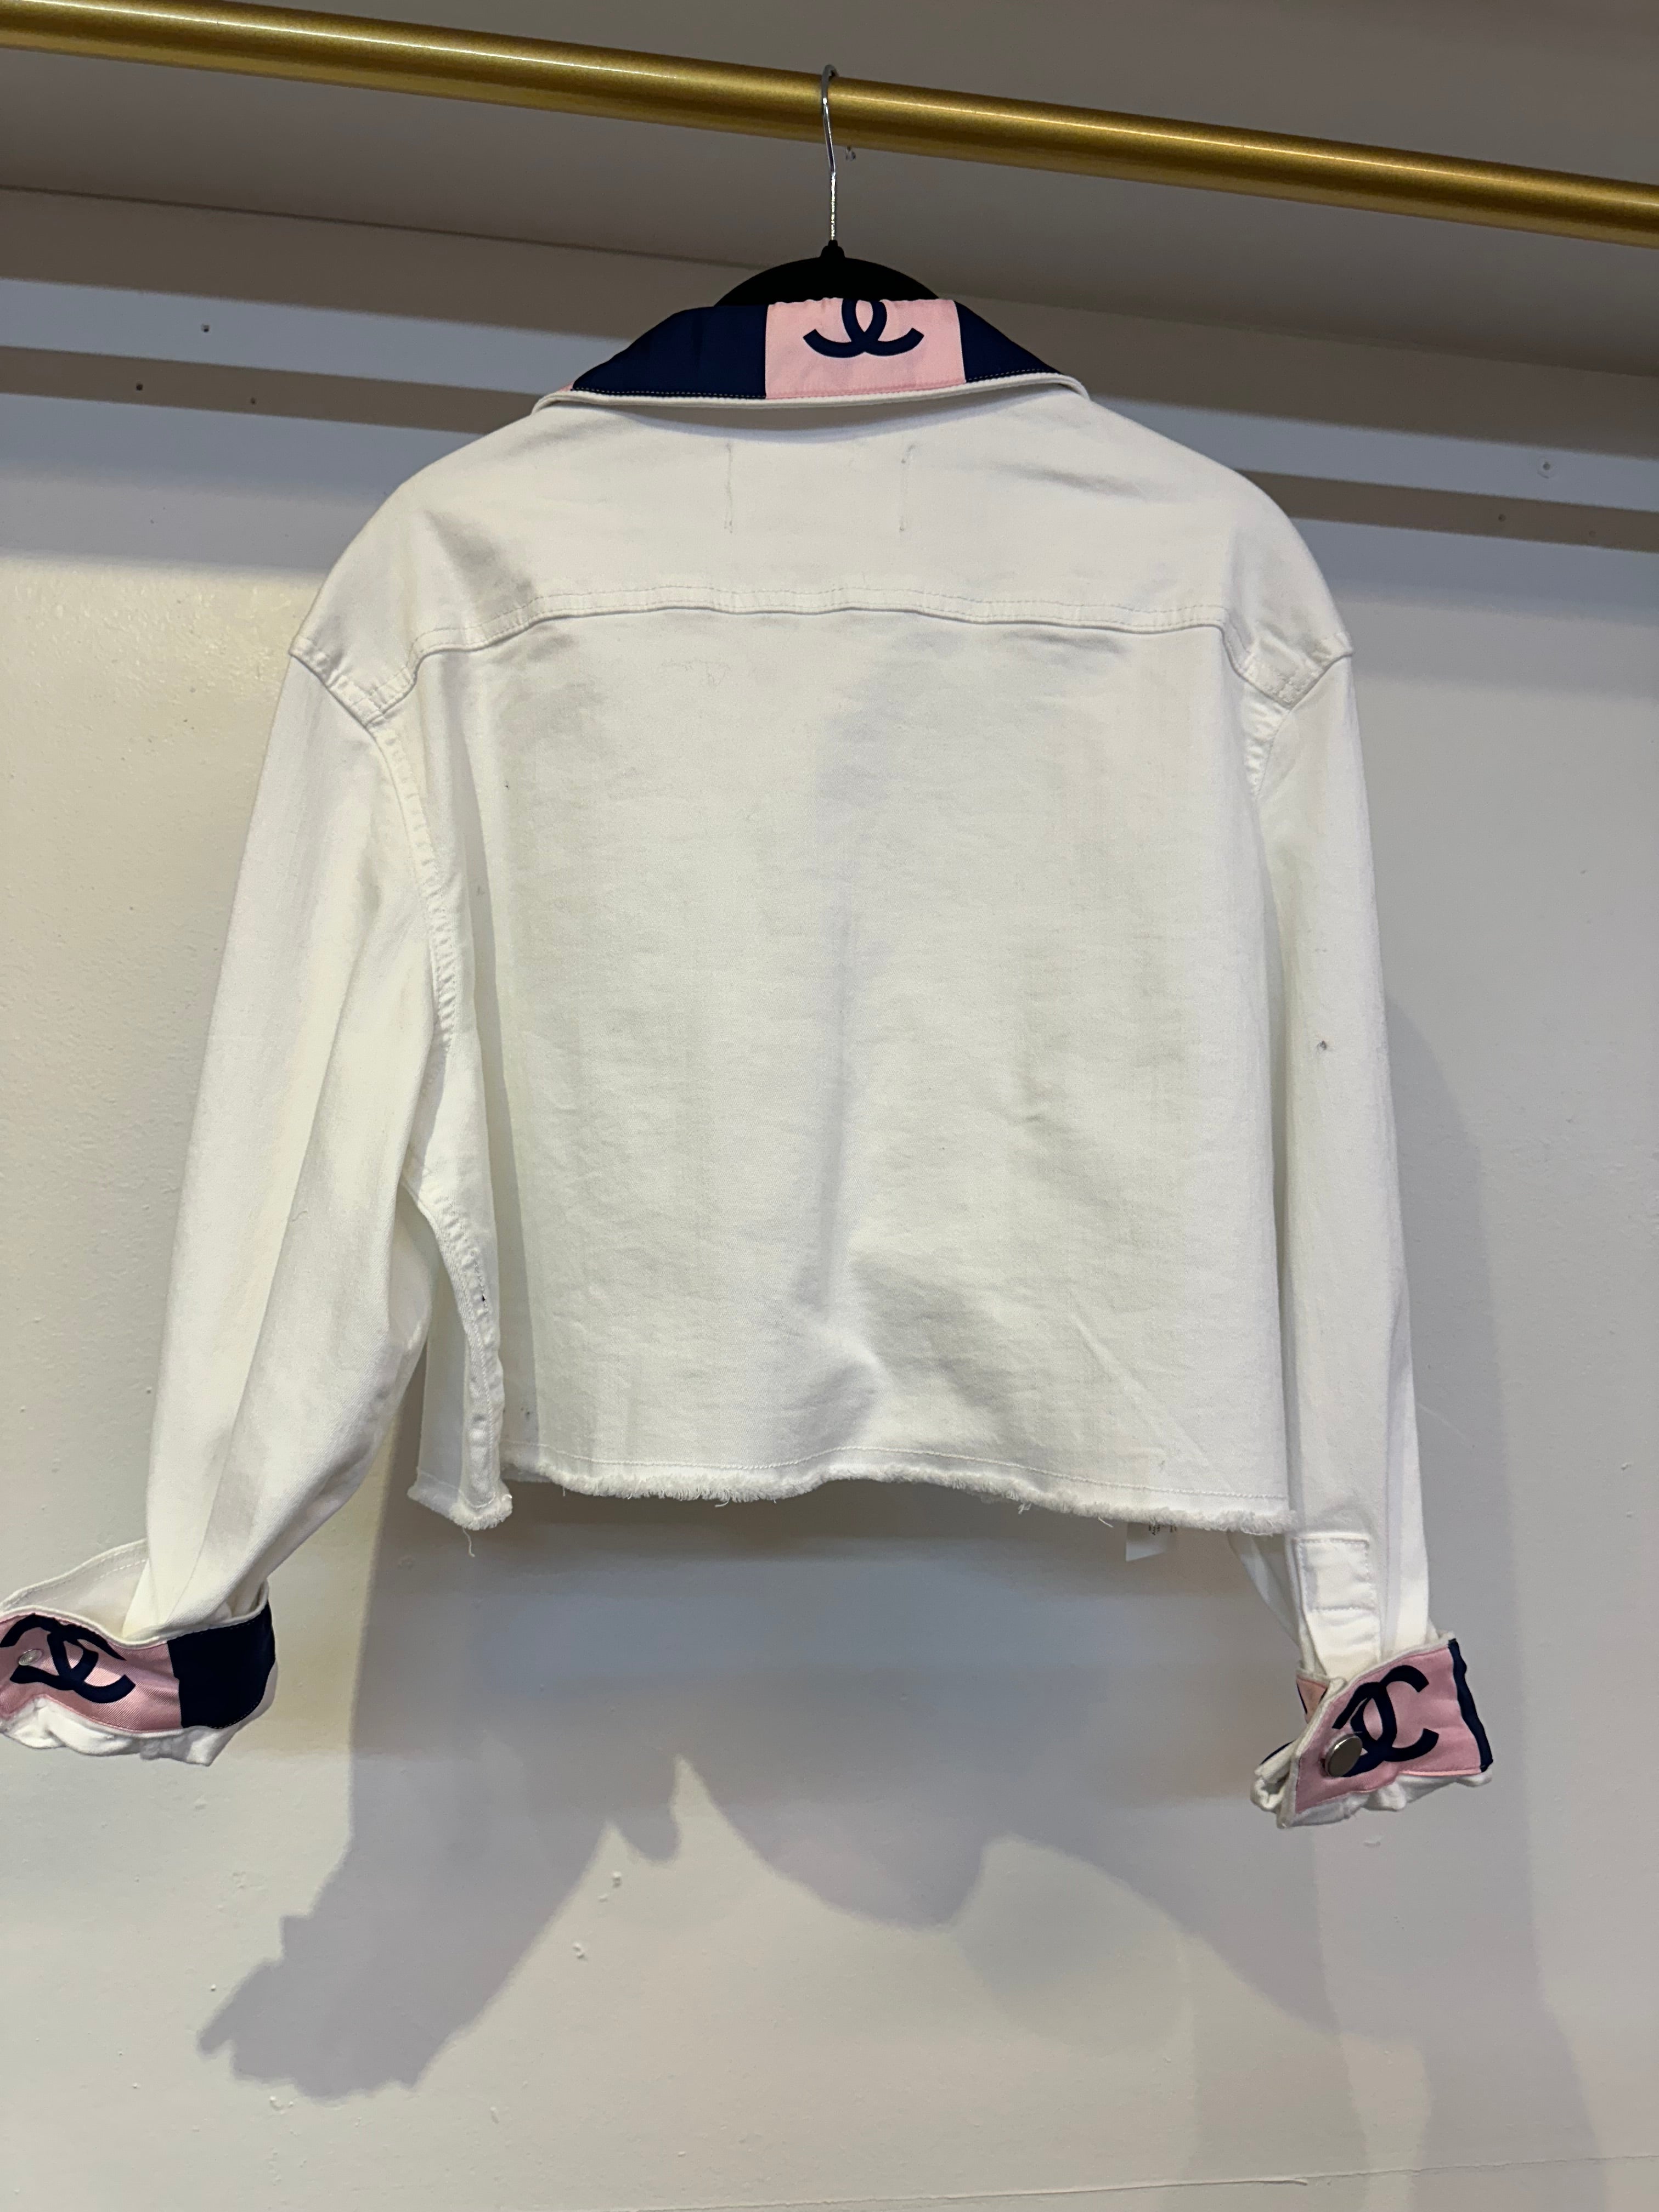 Repurposed Denim Jacket - Pink and White